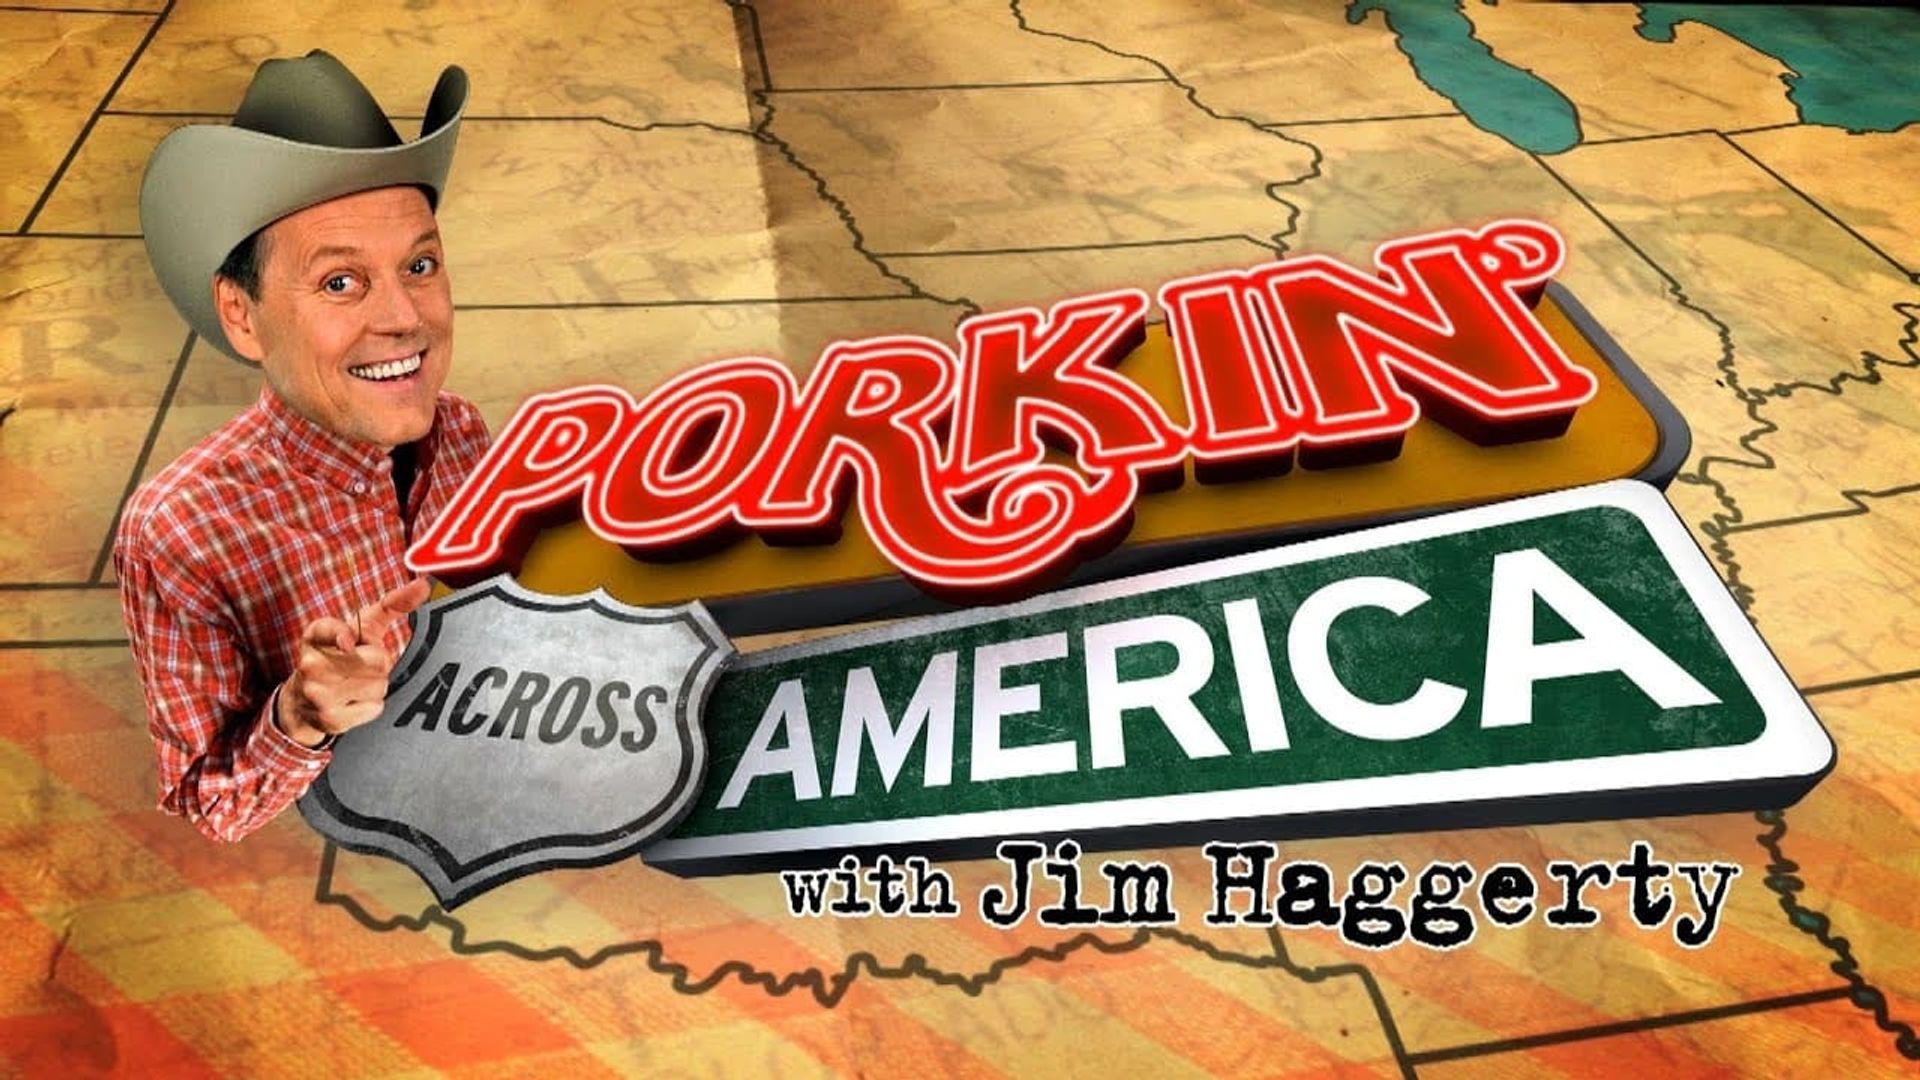 Porkin' Across America background